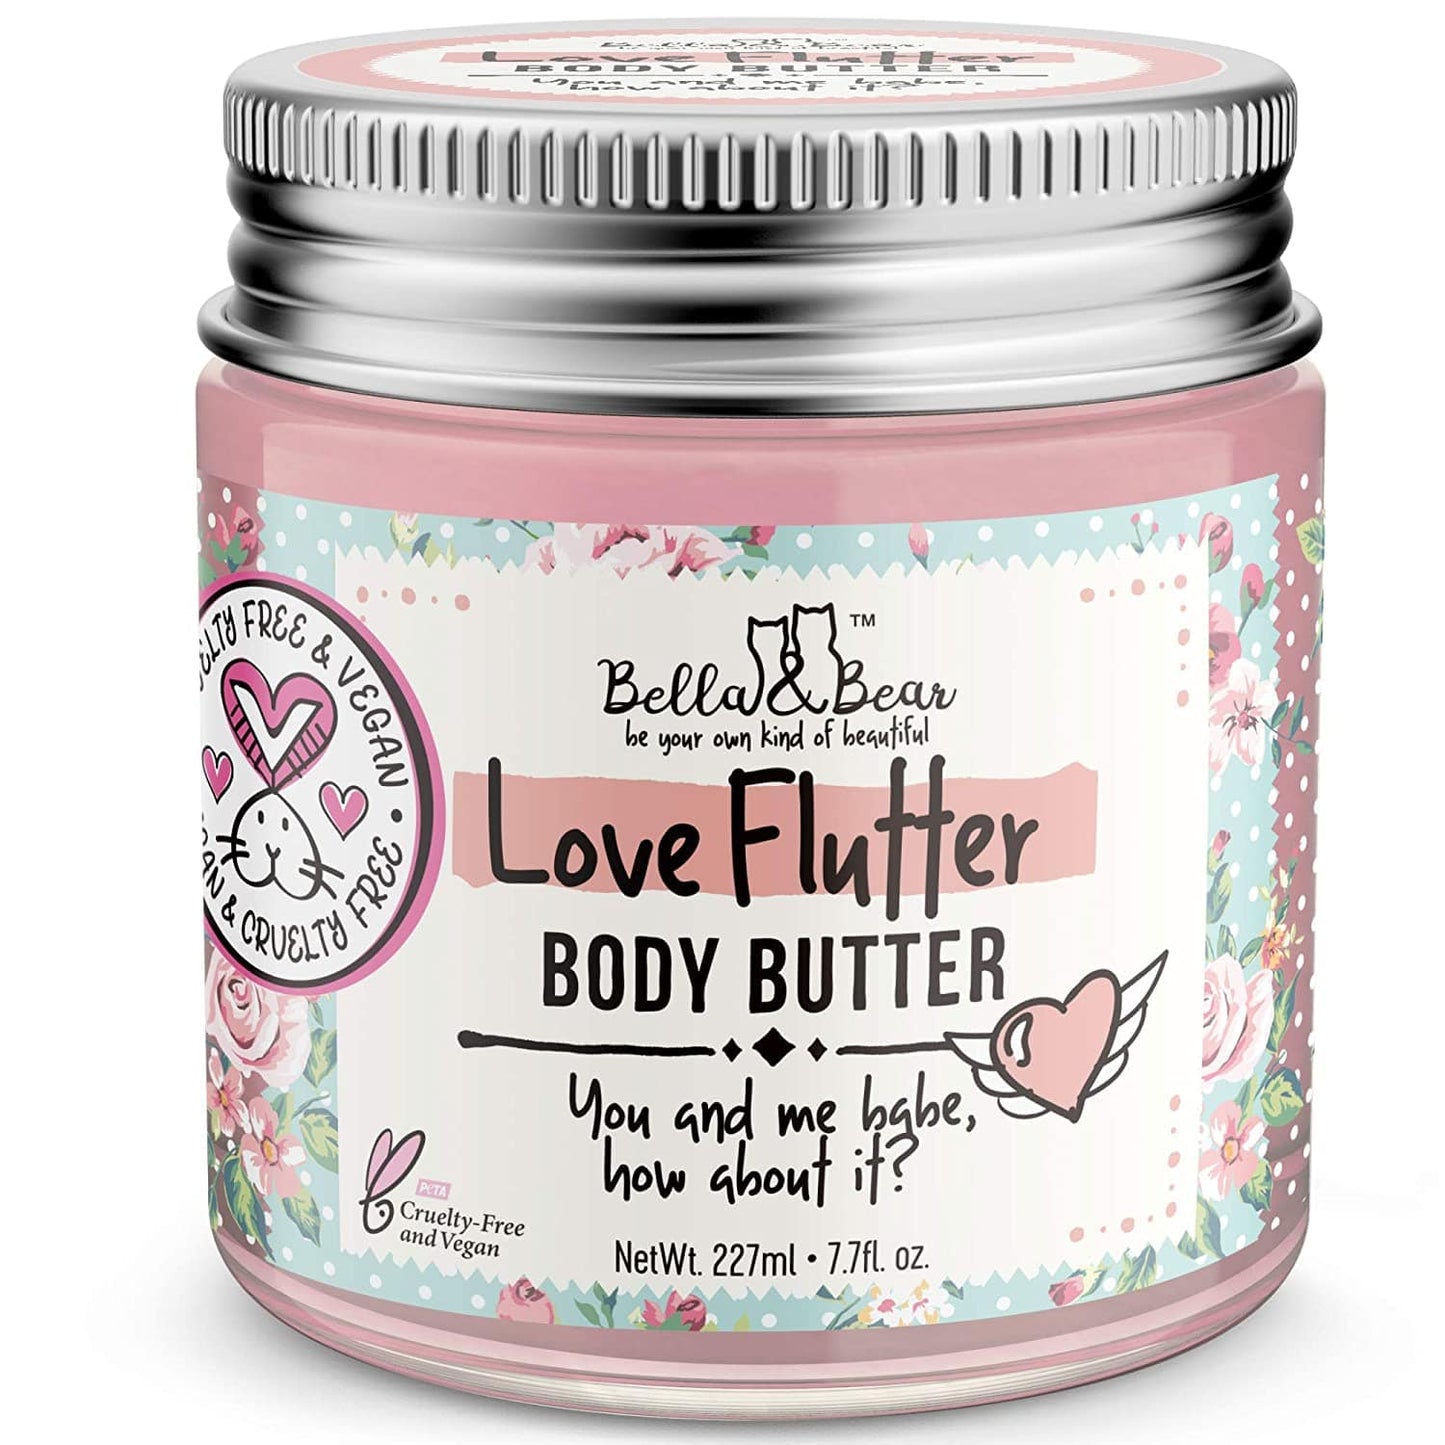 Love Flutter Body Butter Moisturizer Lotion 6.7oz